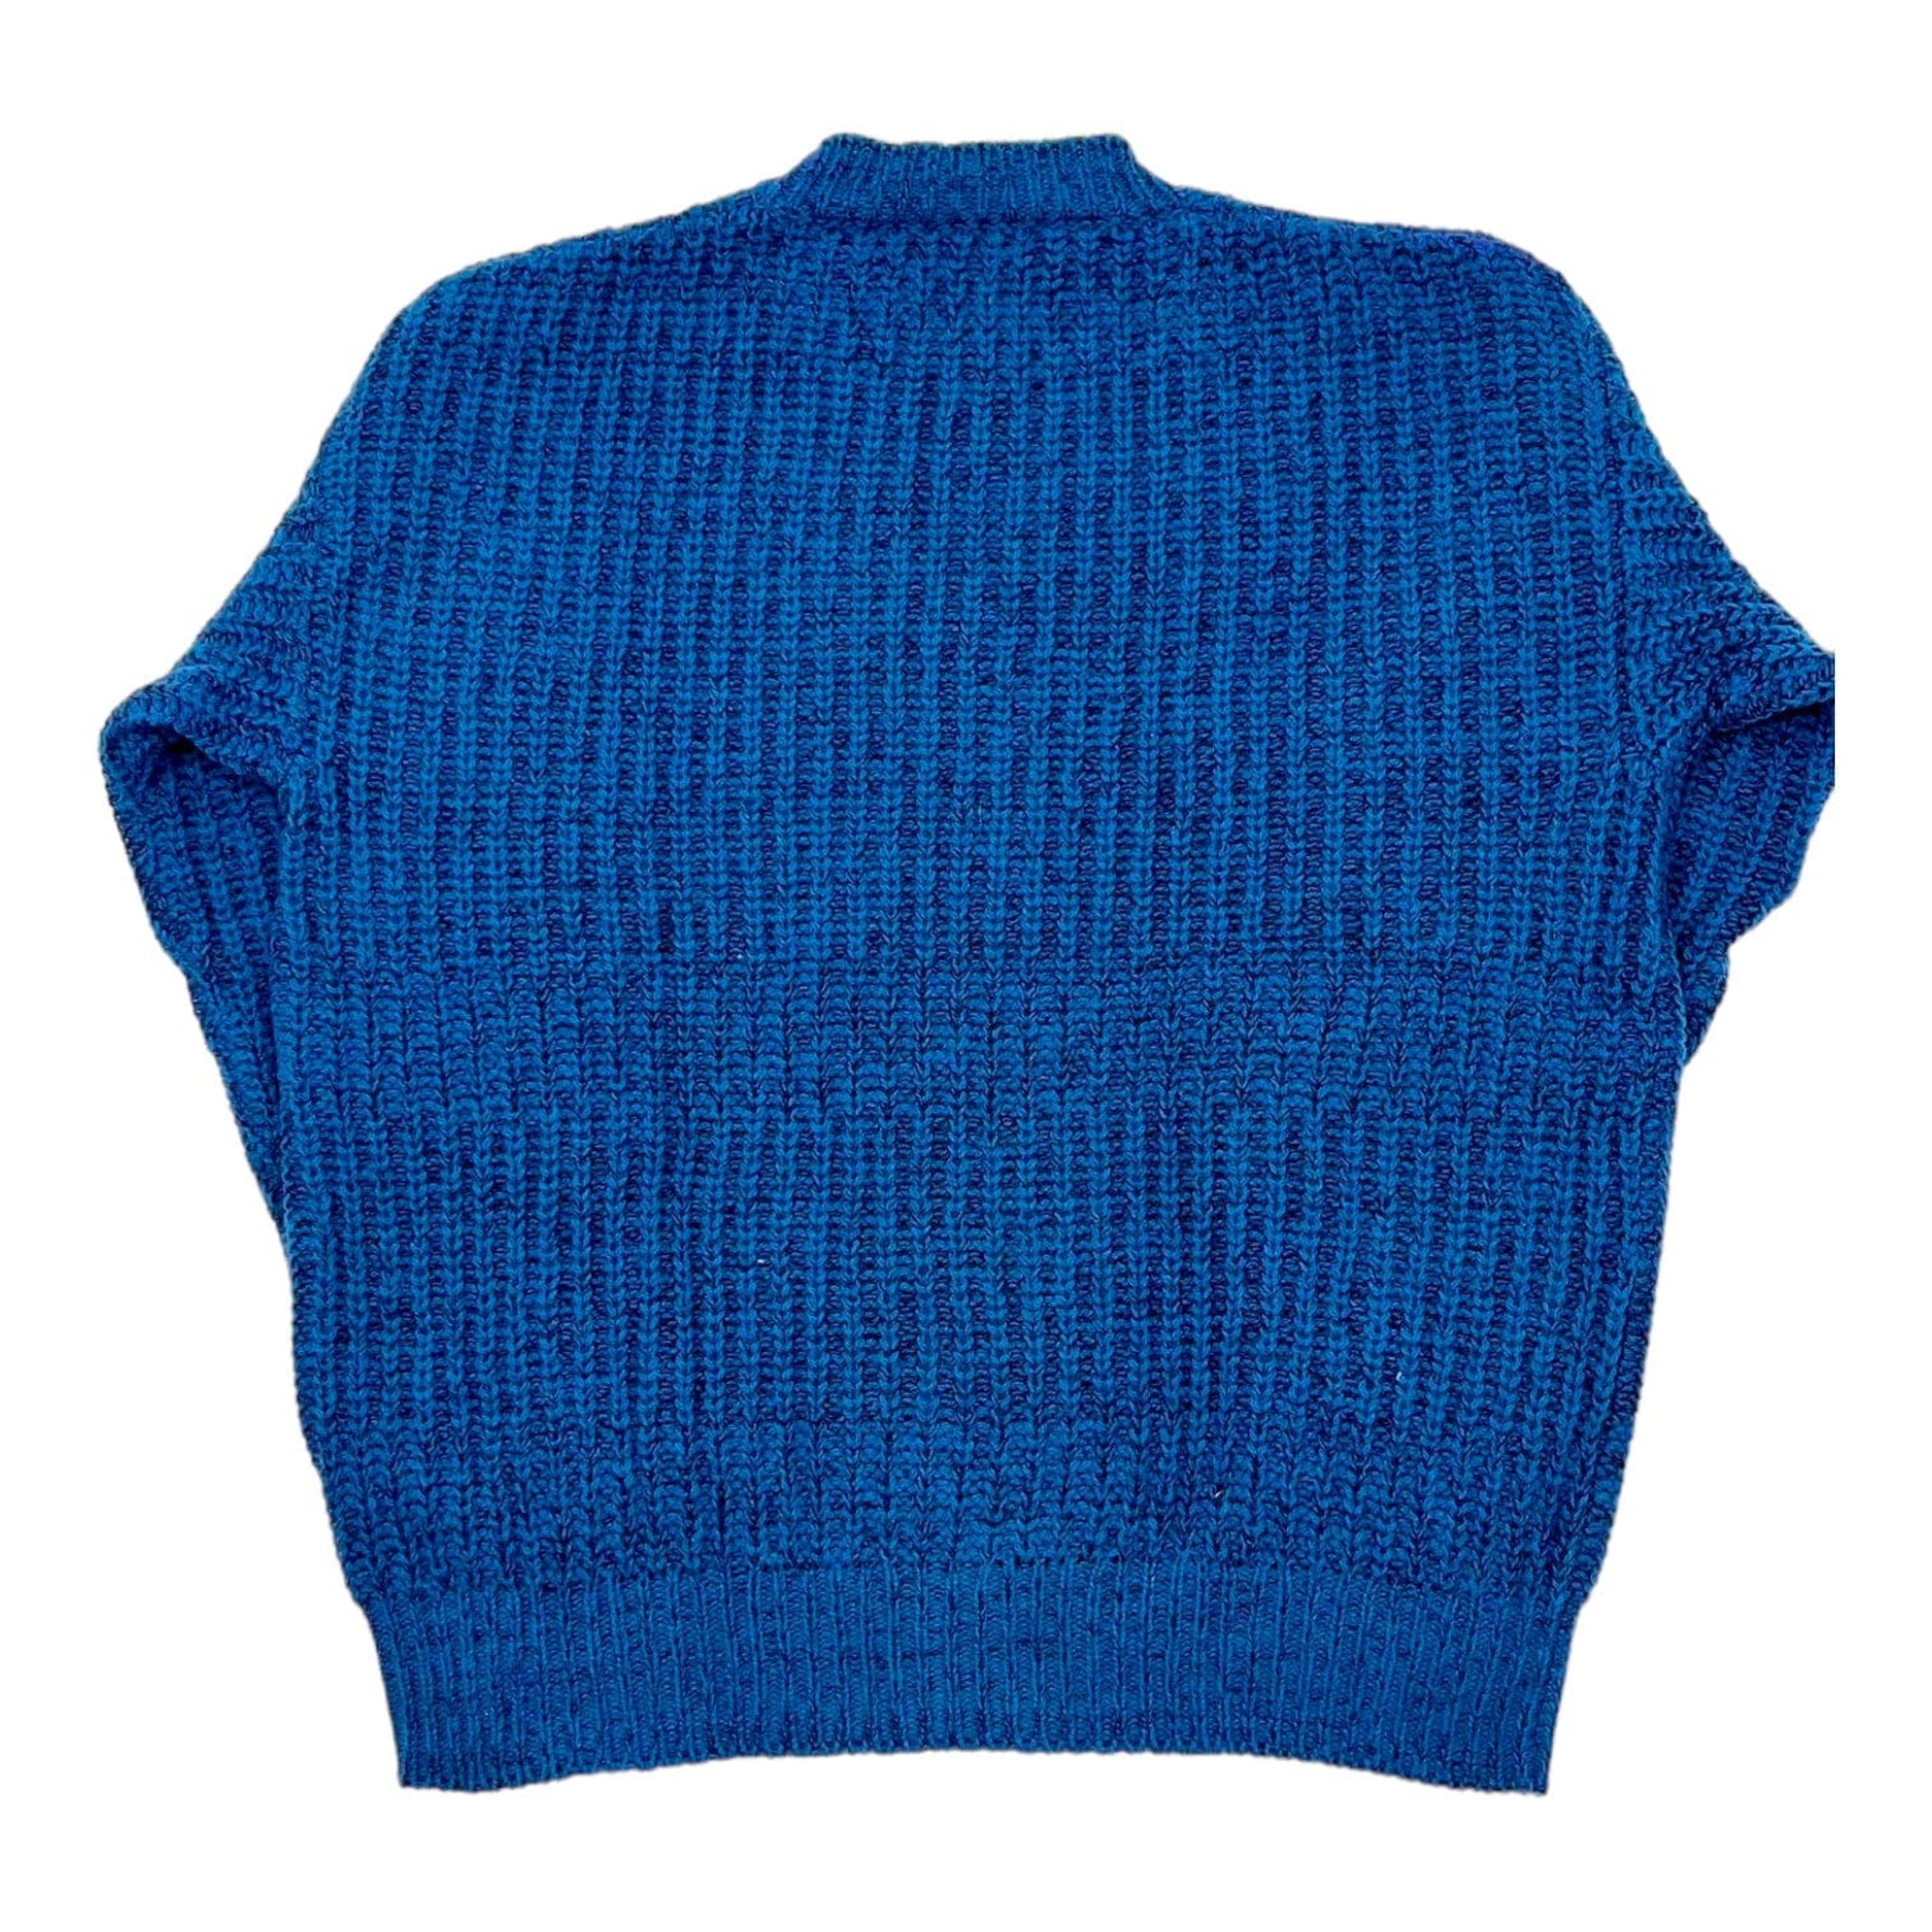 Alternate View 1 of Marni Gradient Effect Knitted Sweatshirt Purple Blue Pre-Owned